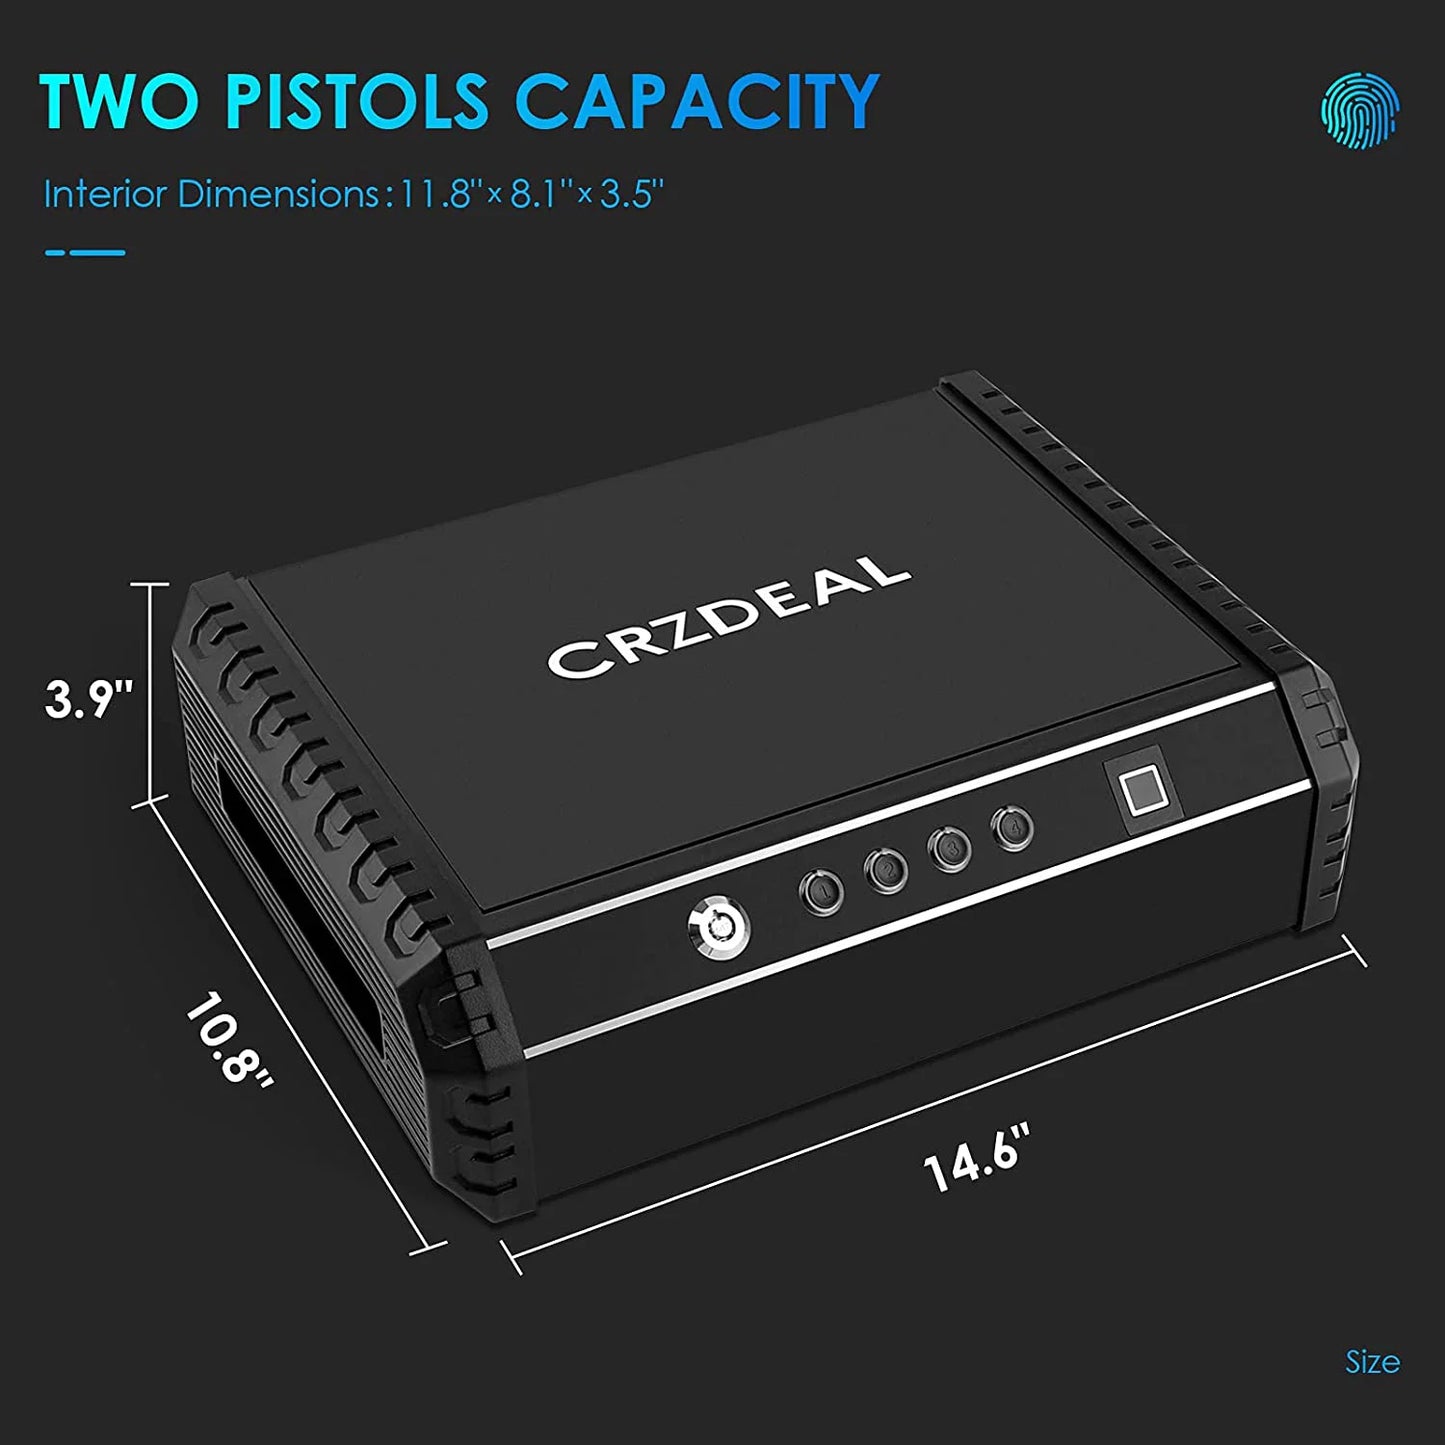 Crzdeal 指紋手槍保險箱，快速存取手槍保險箱，適用於家用、汽車、床頭櫃，黑色